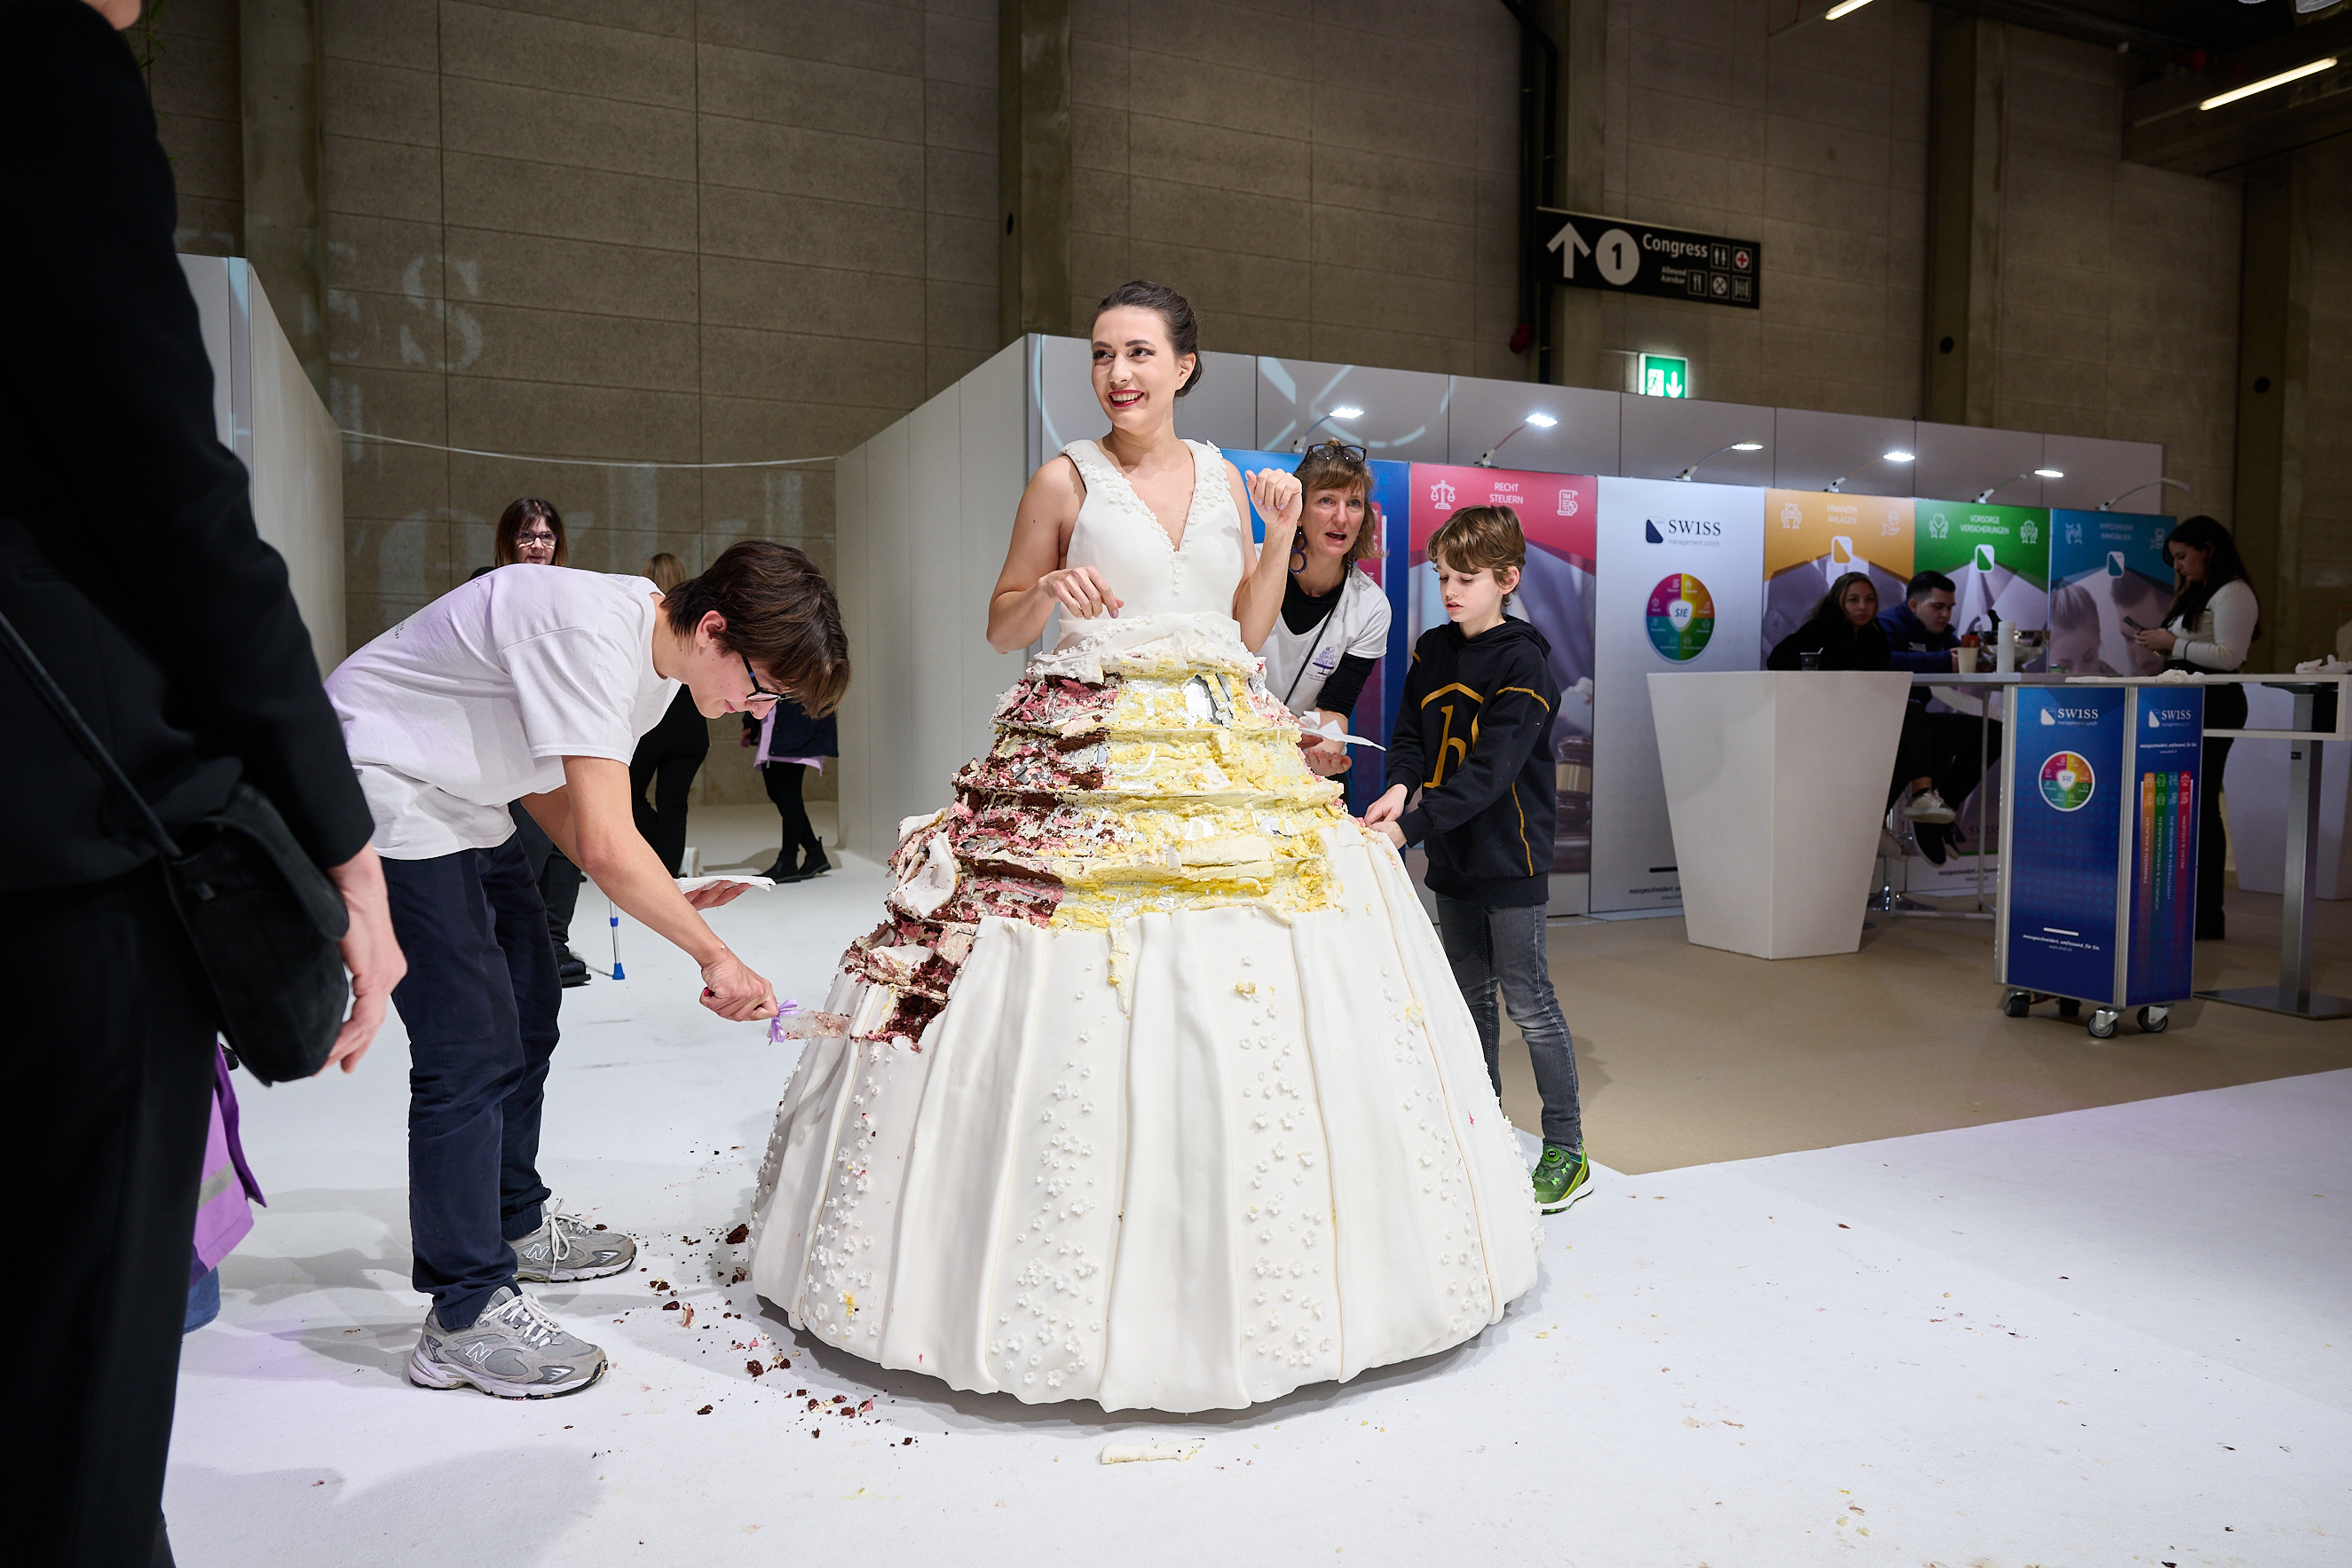 Платье торт рекорд Гиннесса